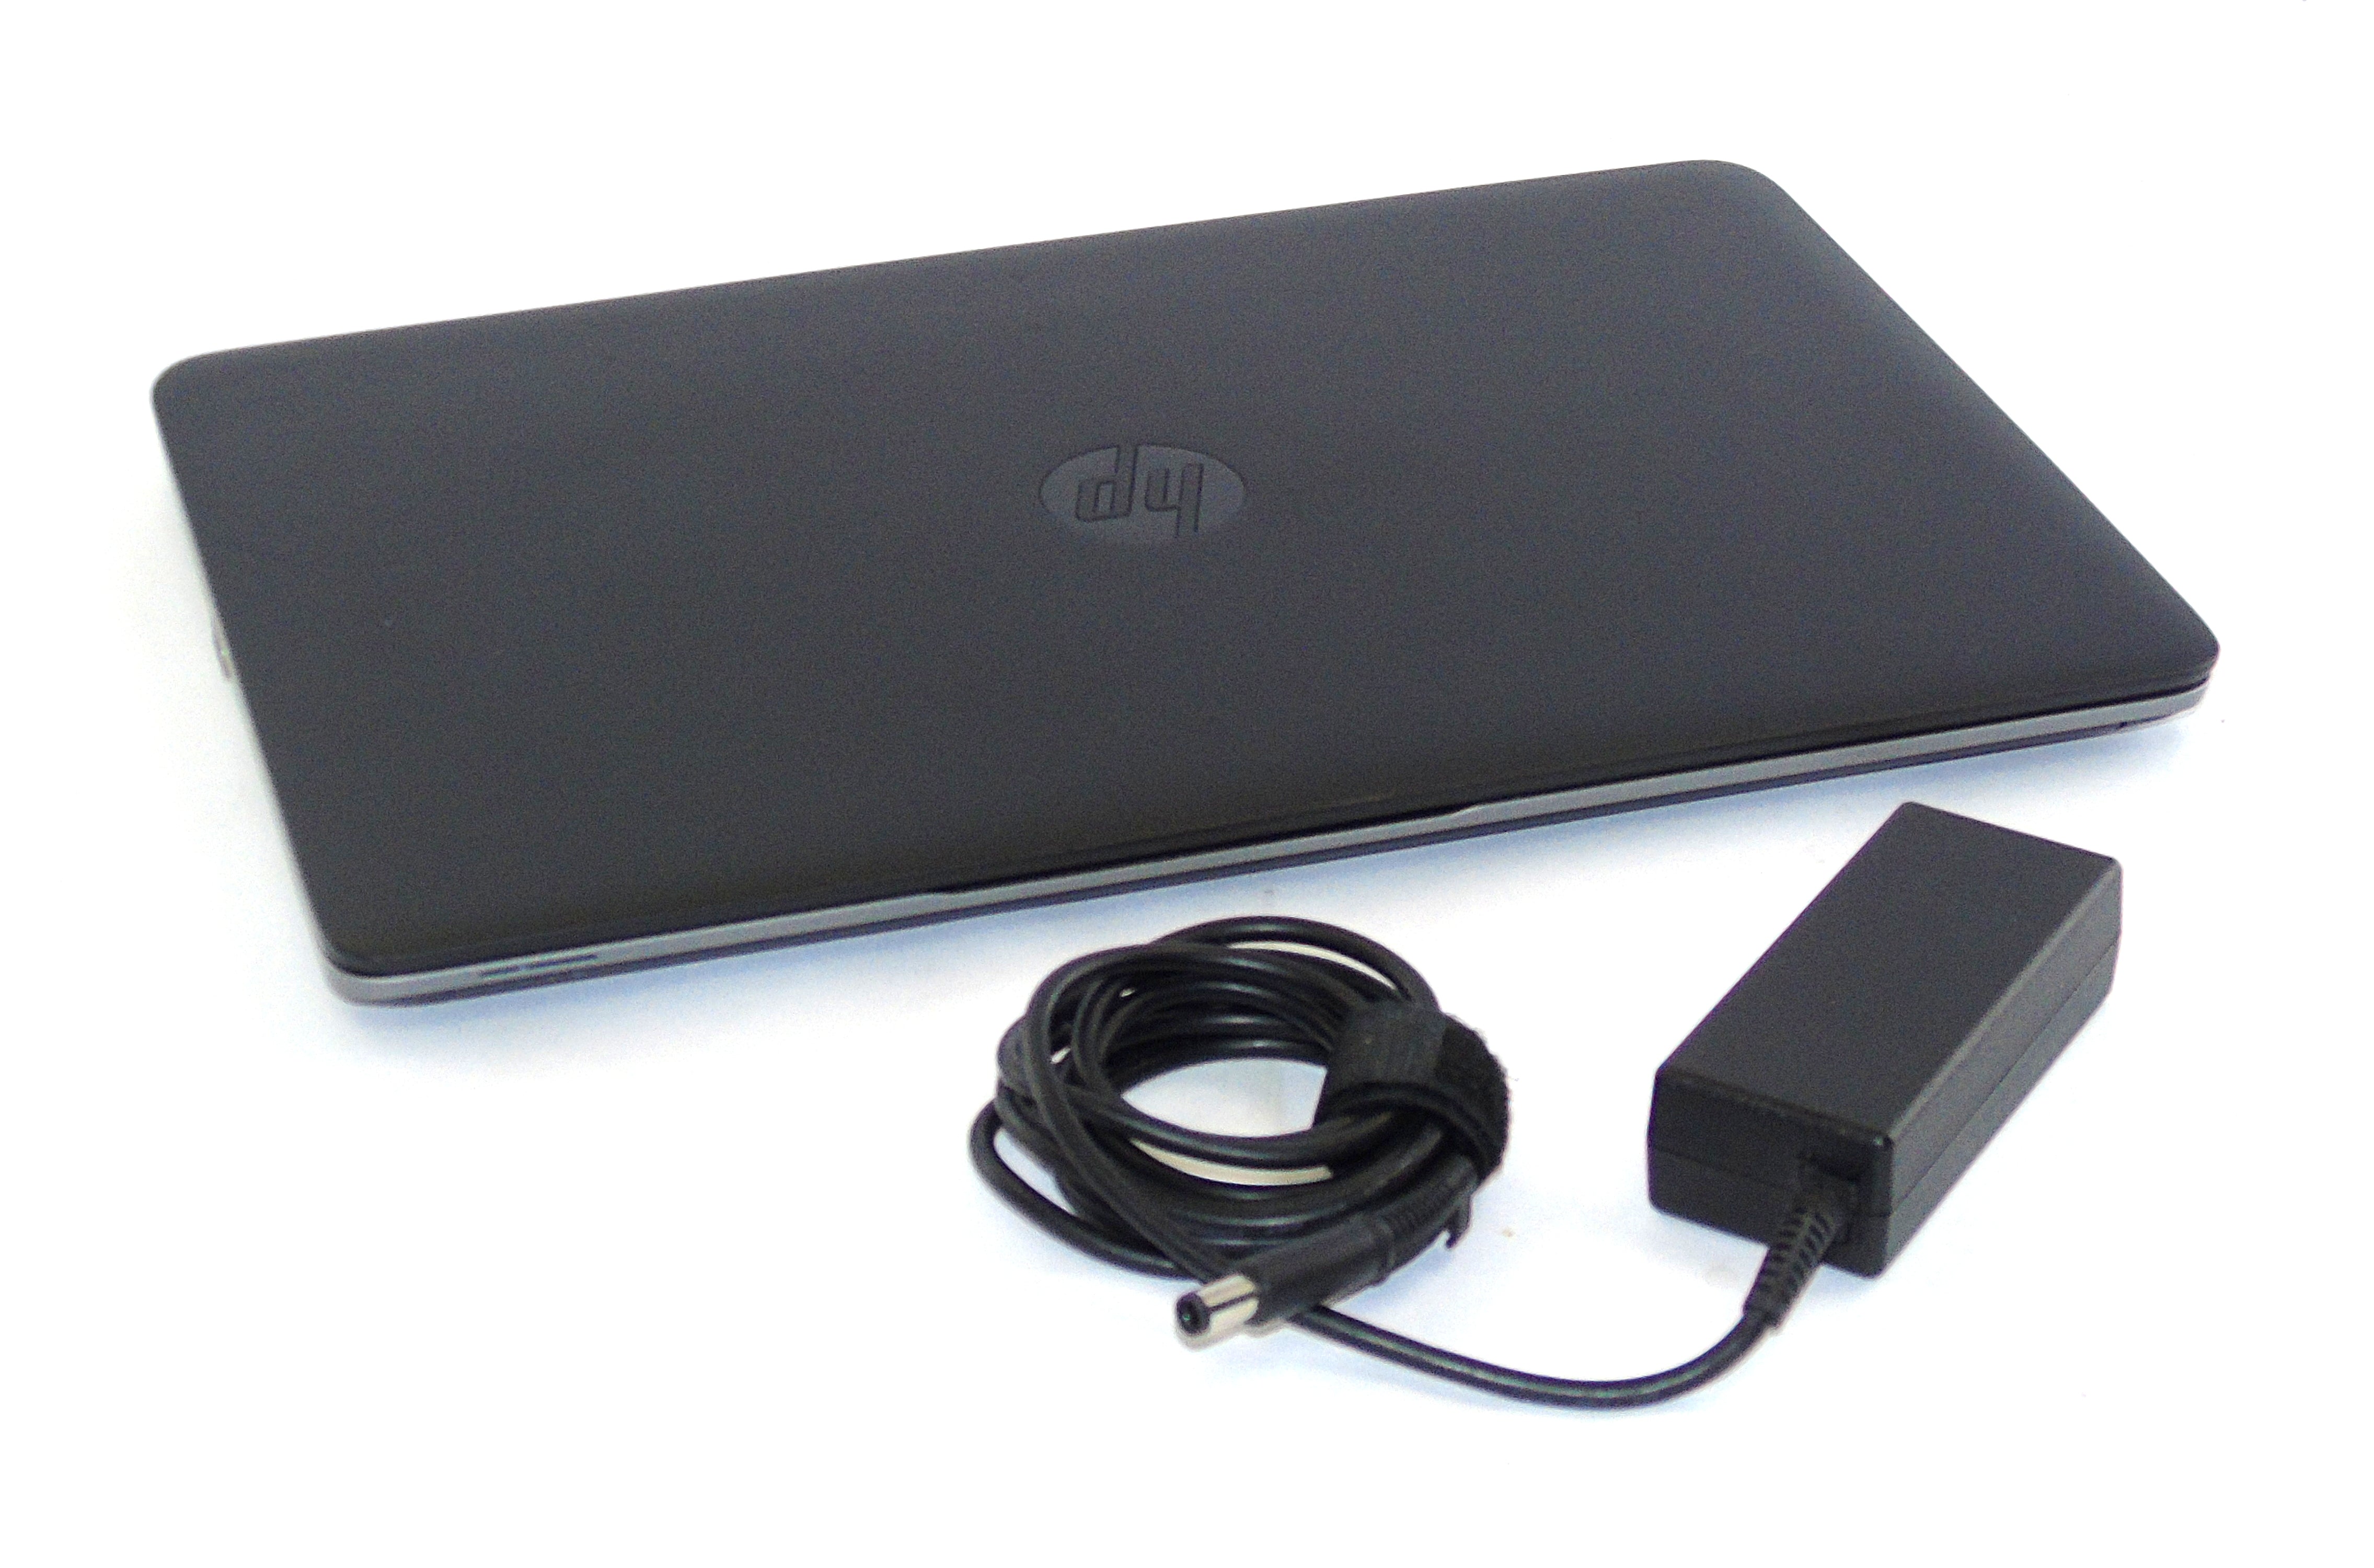 HP Elitebook 850 G2 Laptop, 15.6" Intel Core i7, 8GB RAM, 256GB SSD